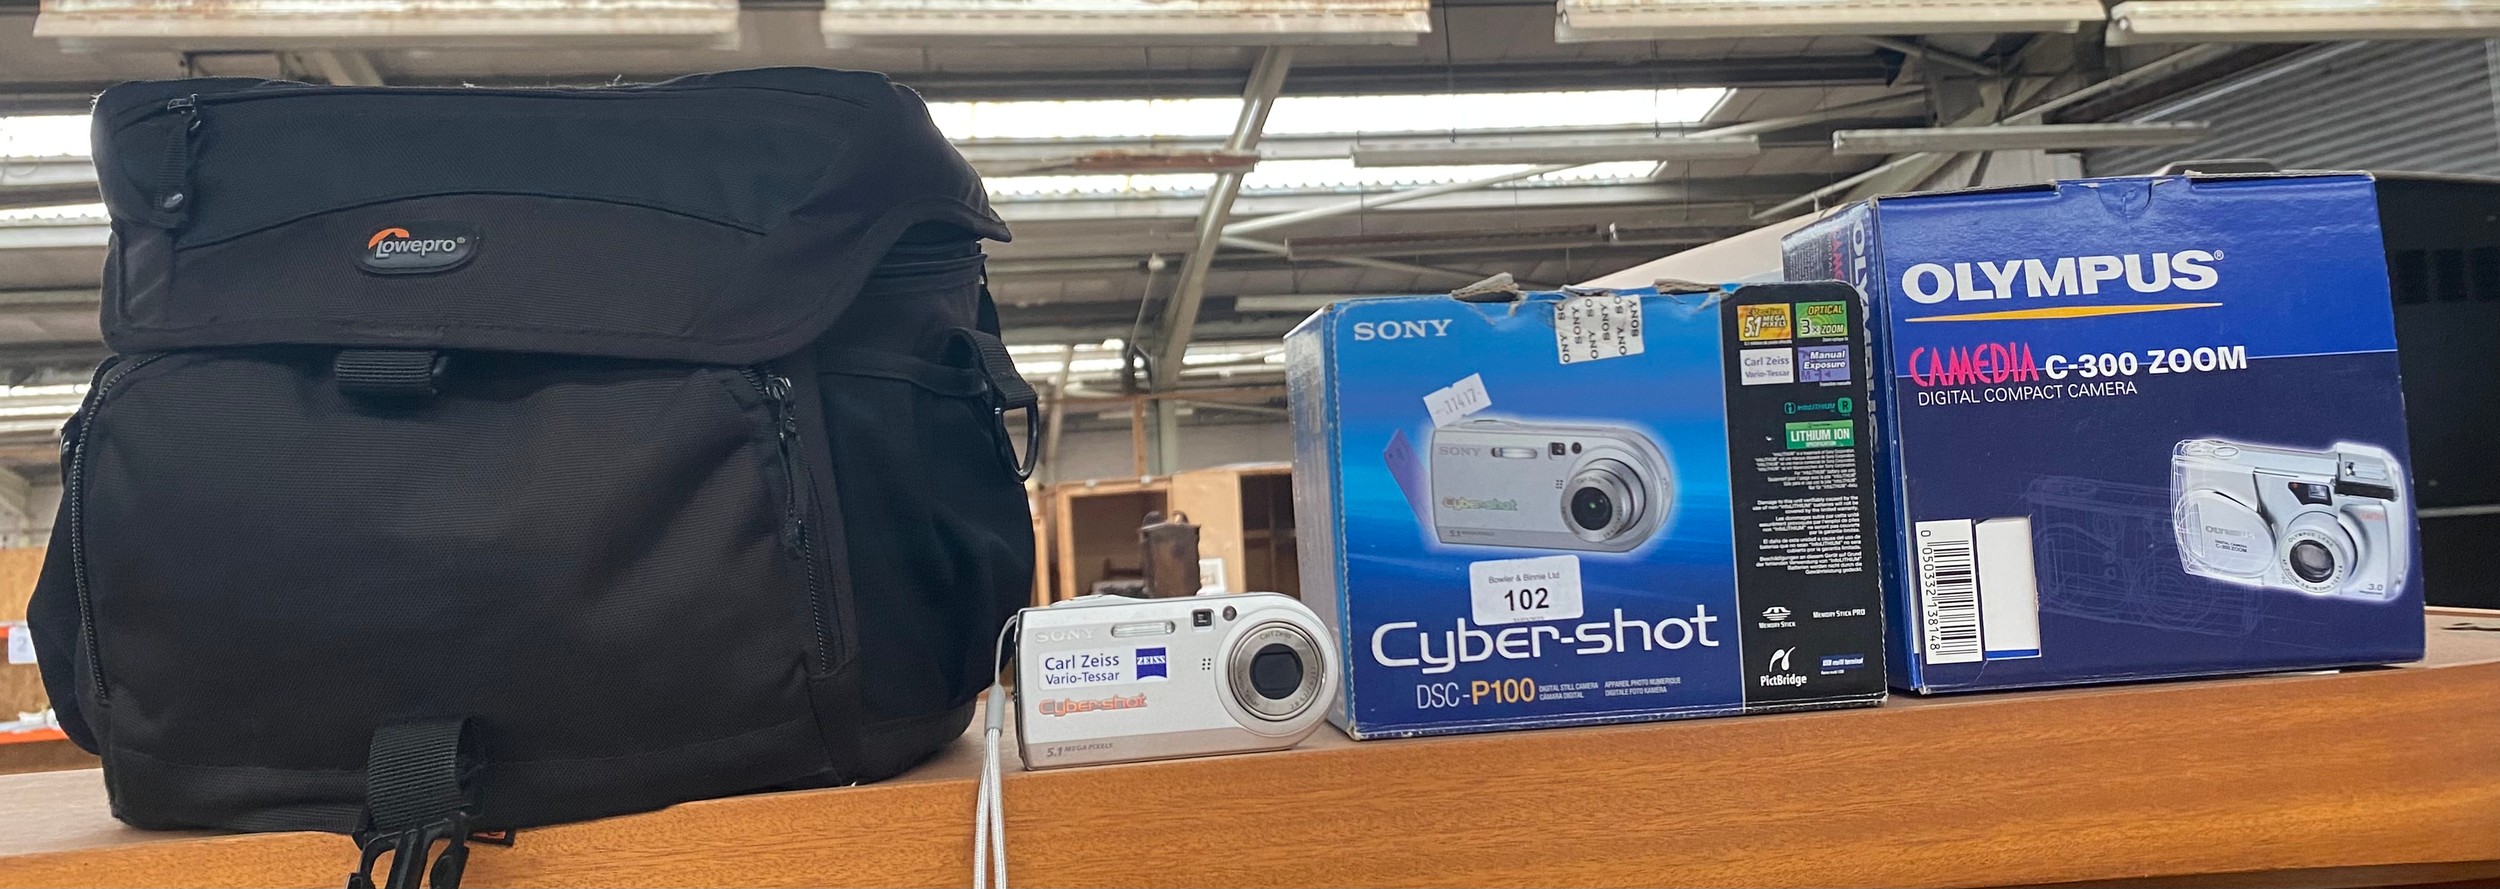 Boxed Sony cyber shot camera, boxed olympus camera, lower pro camera bag, etc